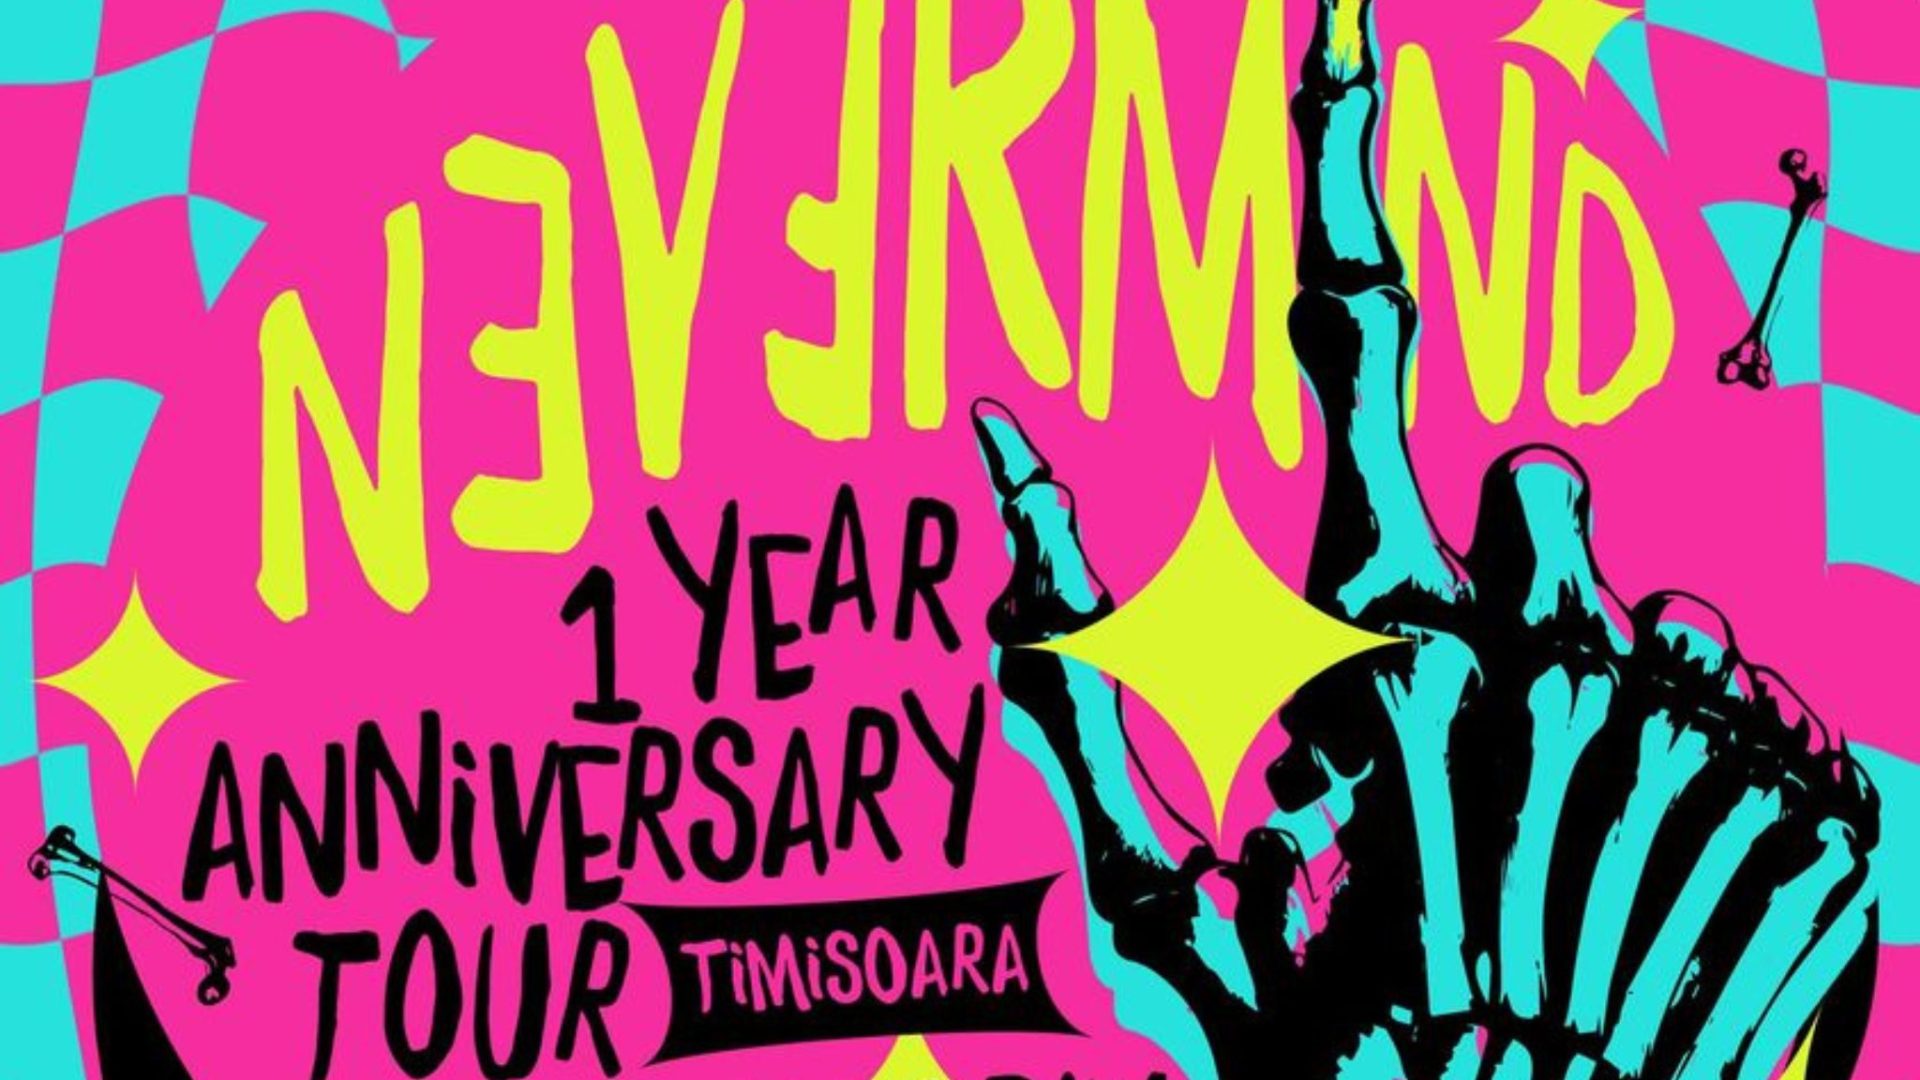 NEVERMIND - 1 year anniversary tour